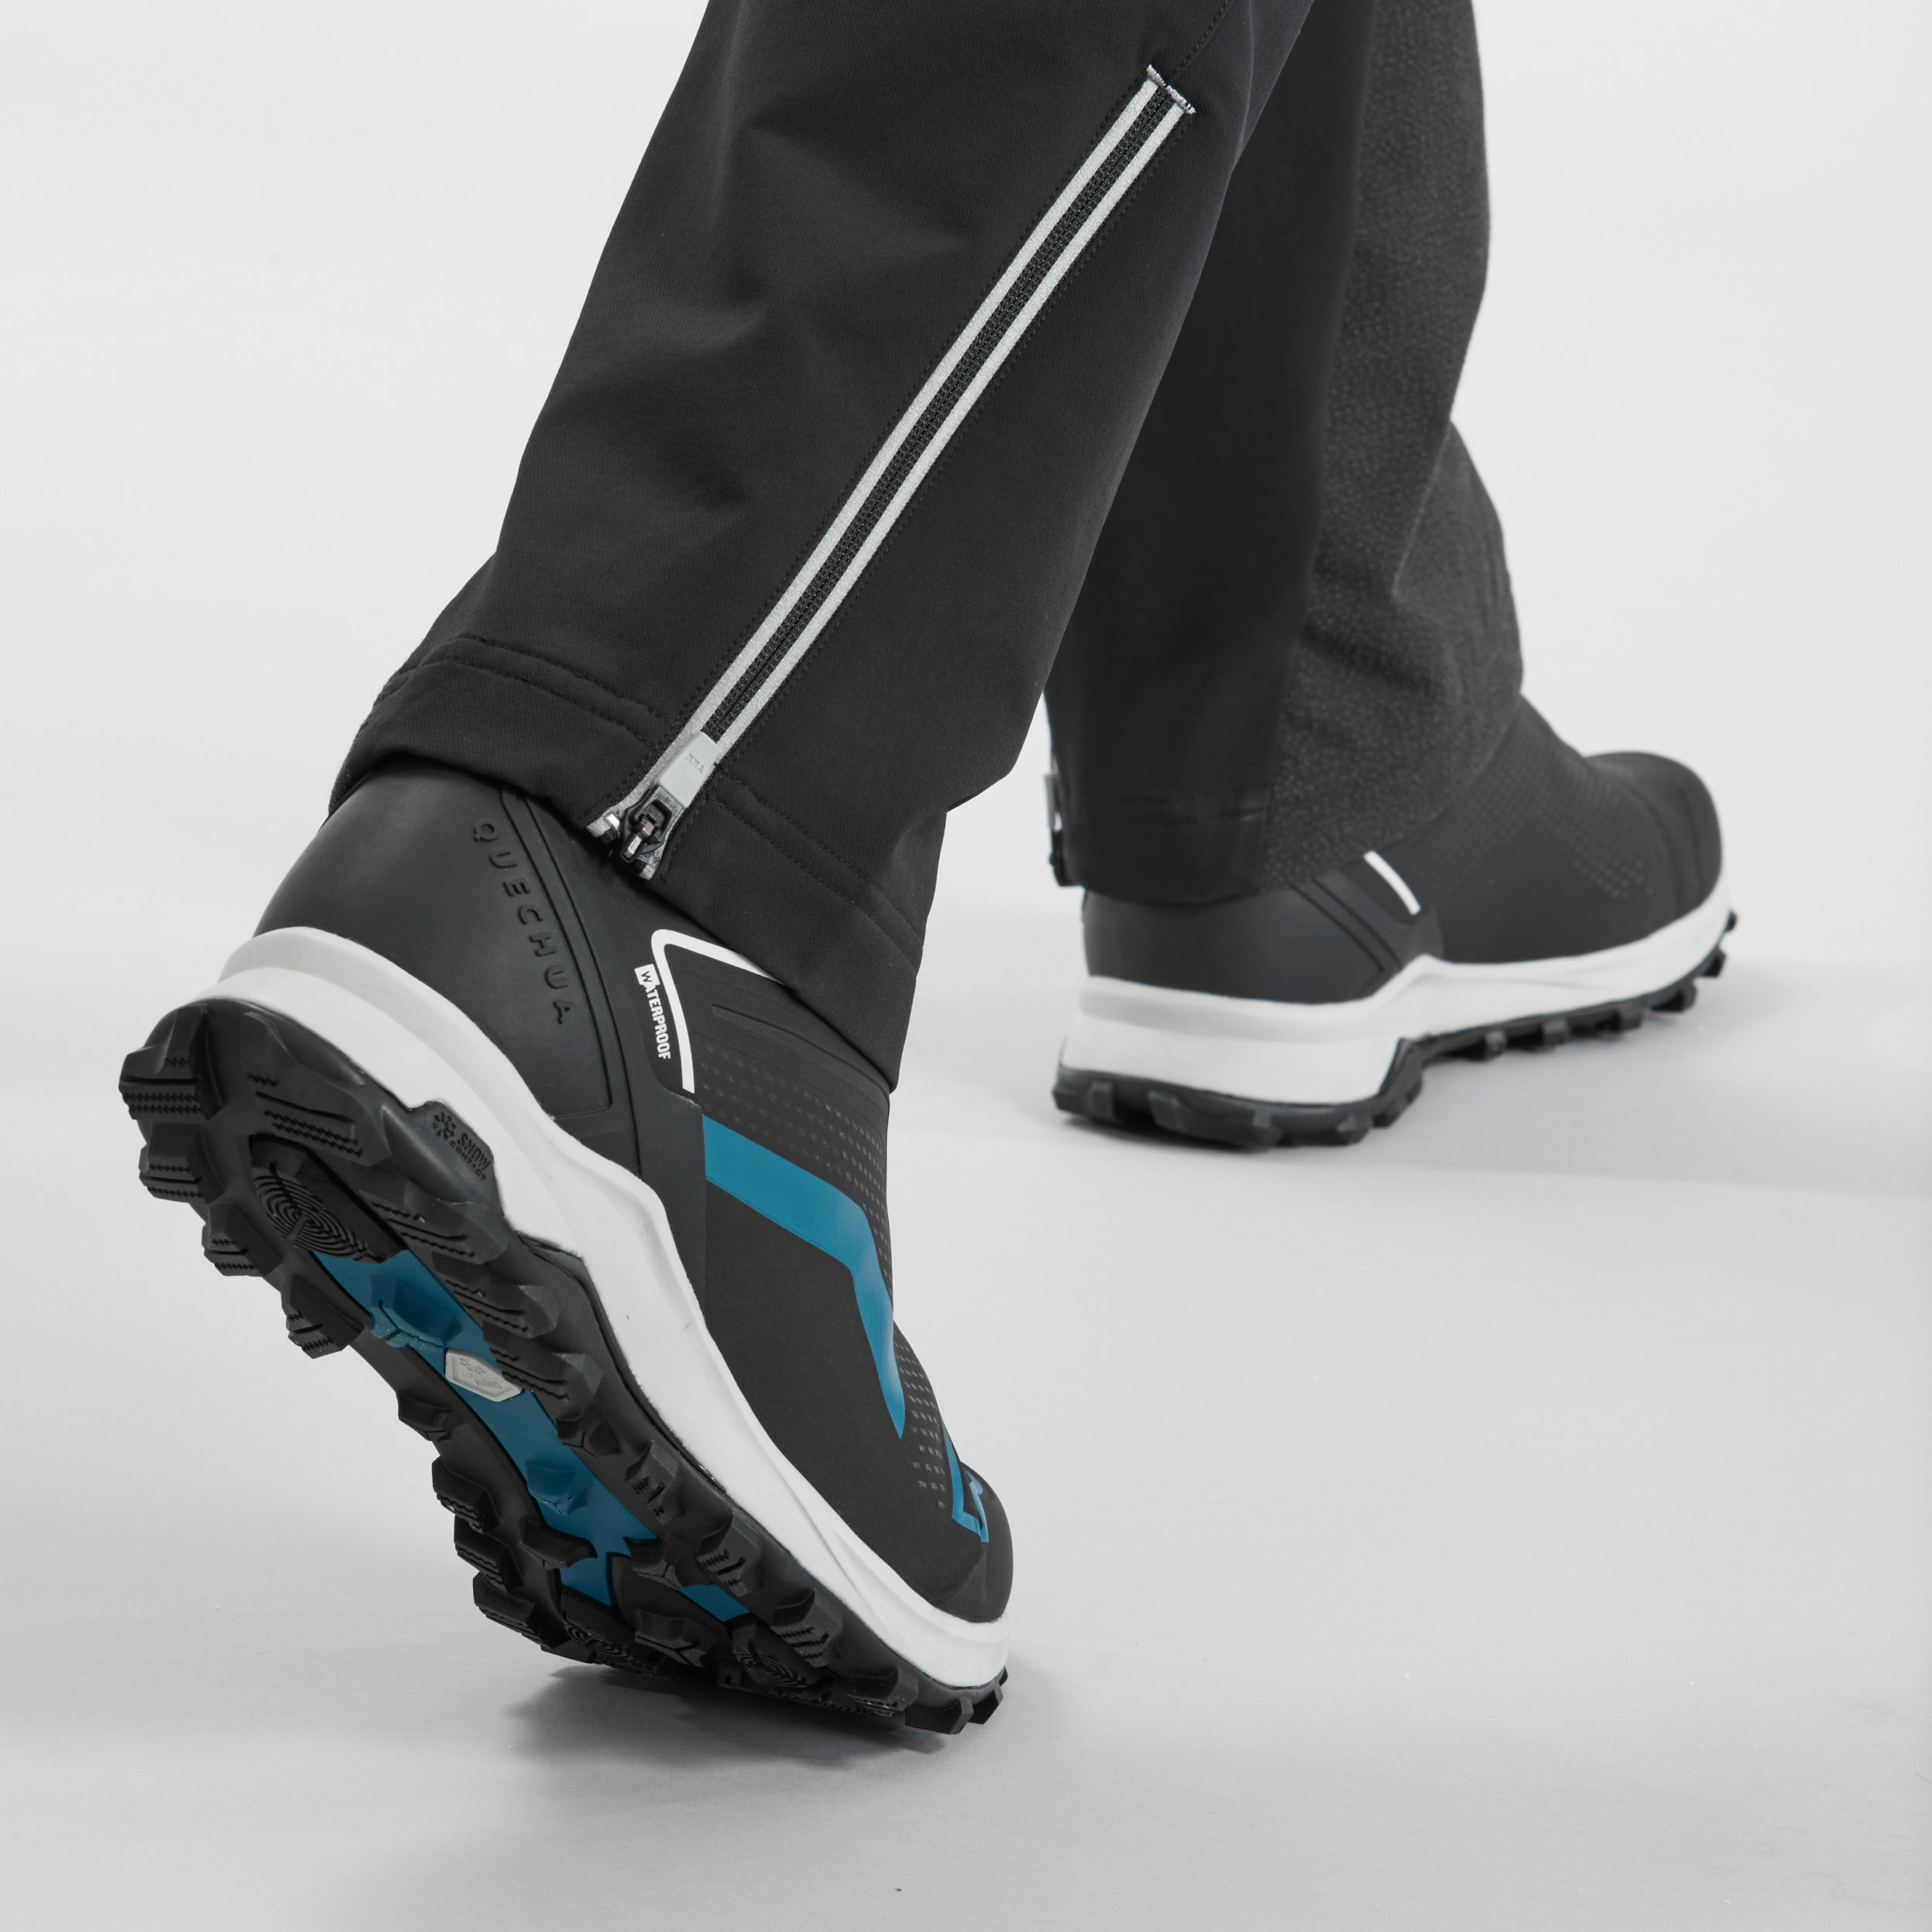 Men’s warm and waterproof hiking boots - SH900 PRO MOUNTAIN   7/7